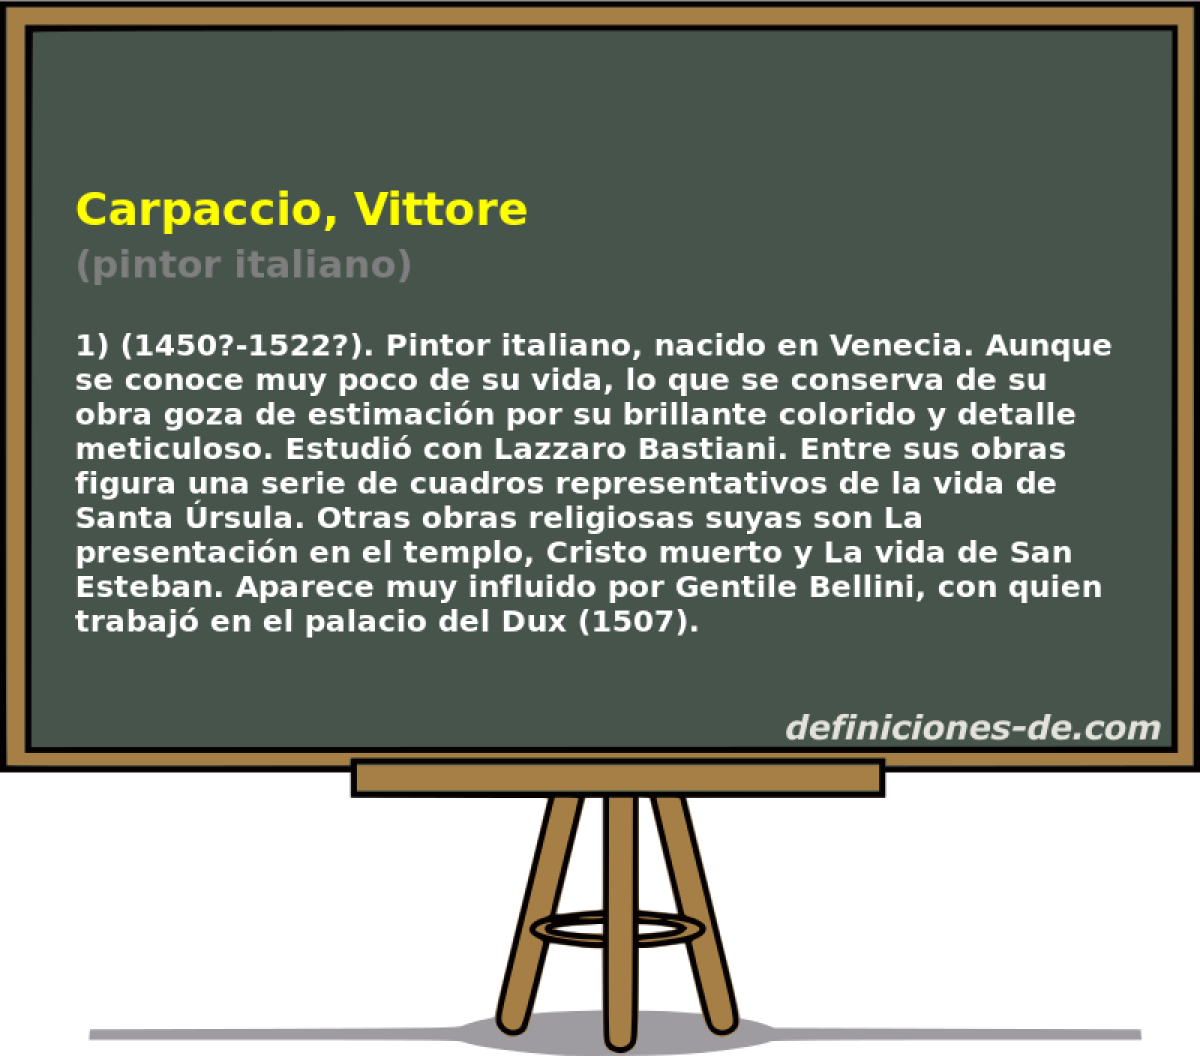 Carpaccio, Vittore (pintor italiano)